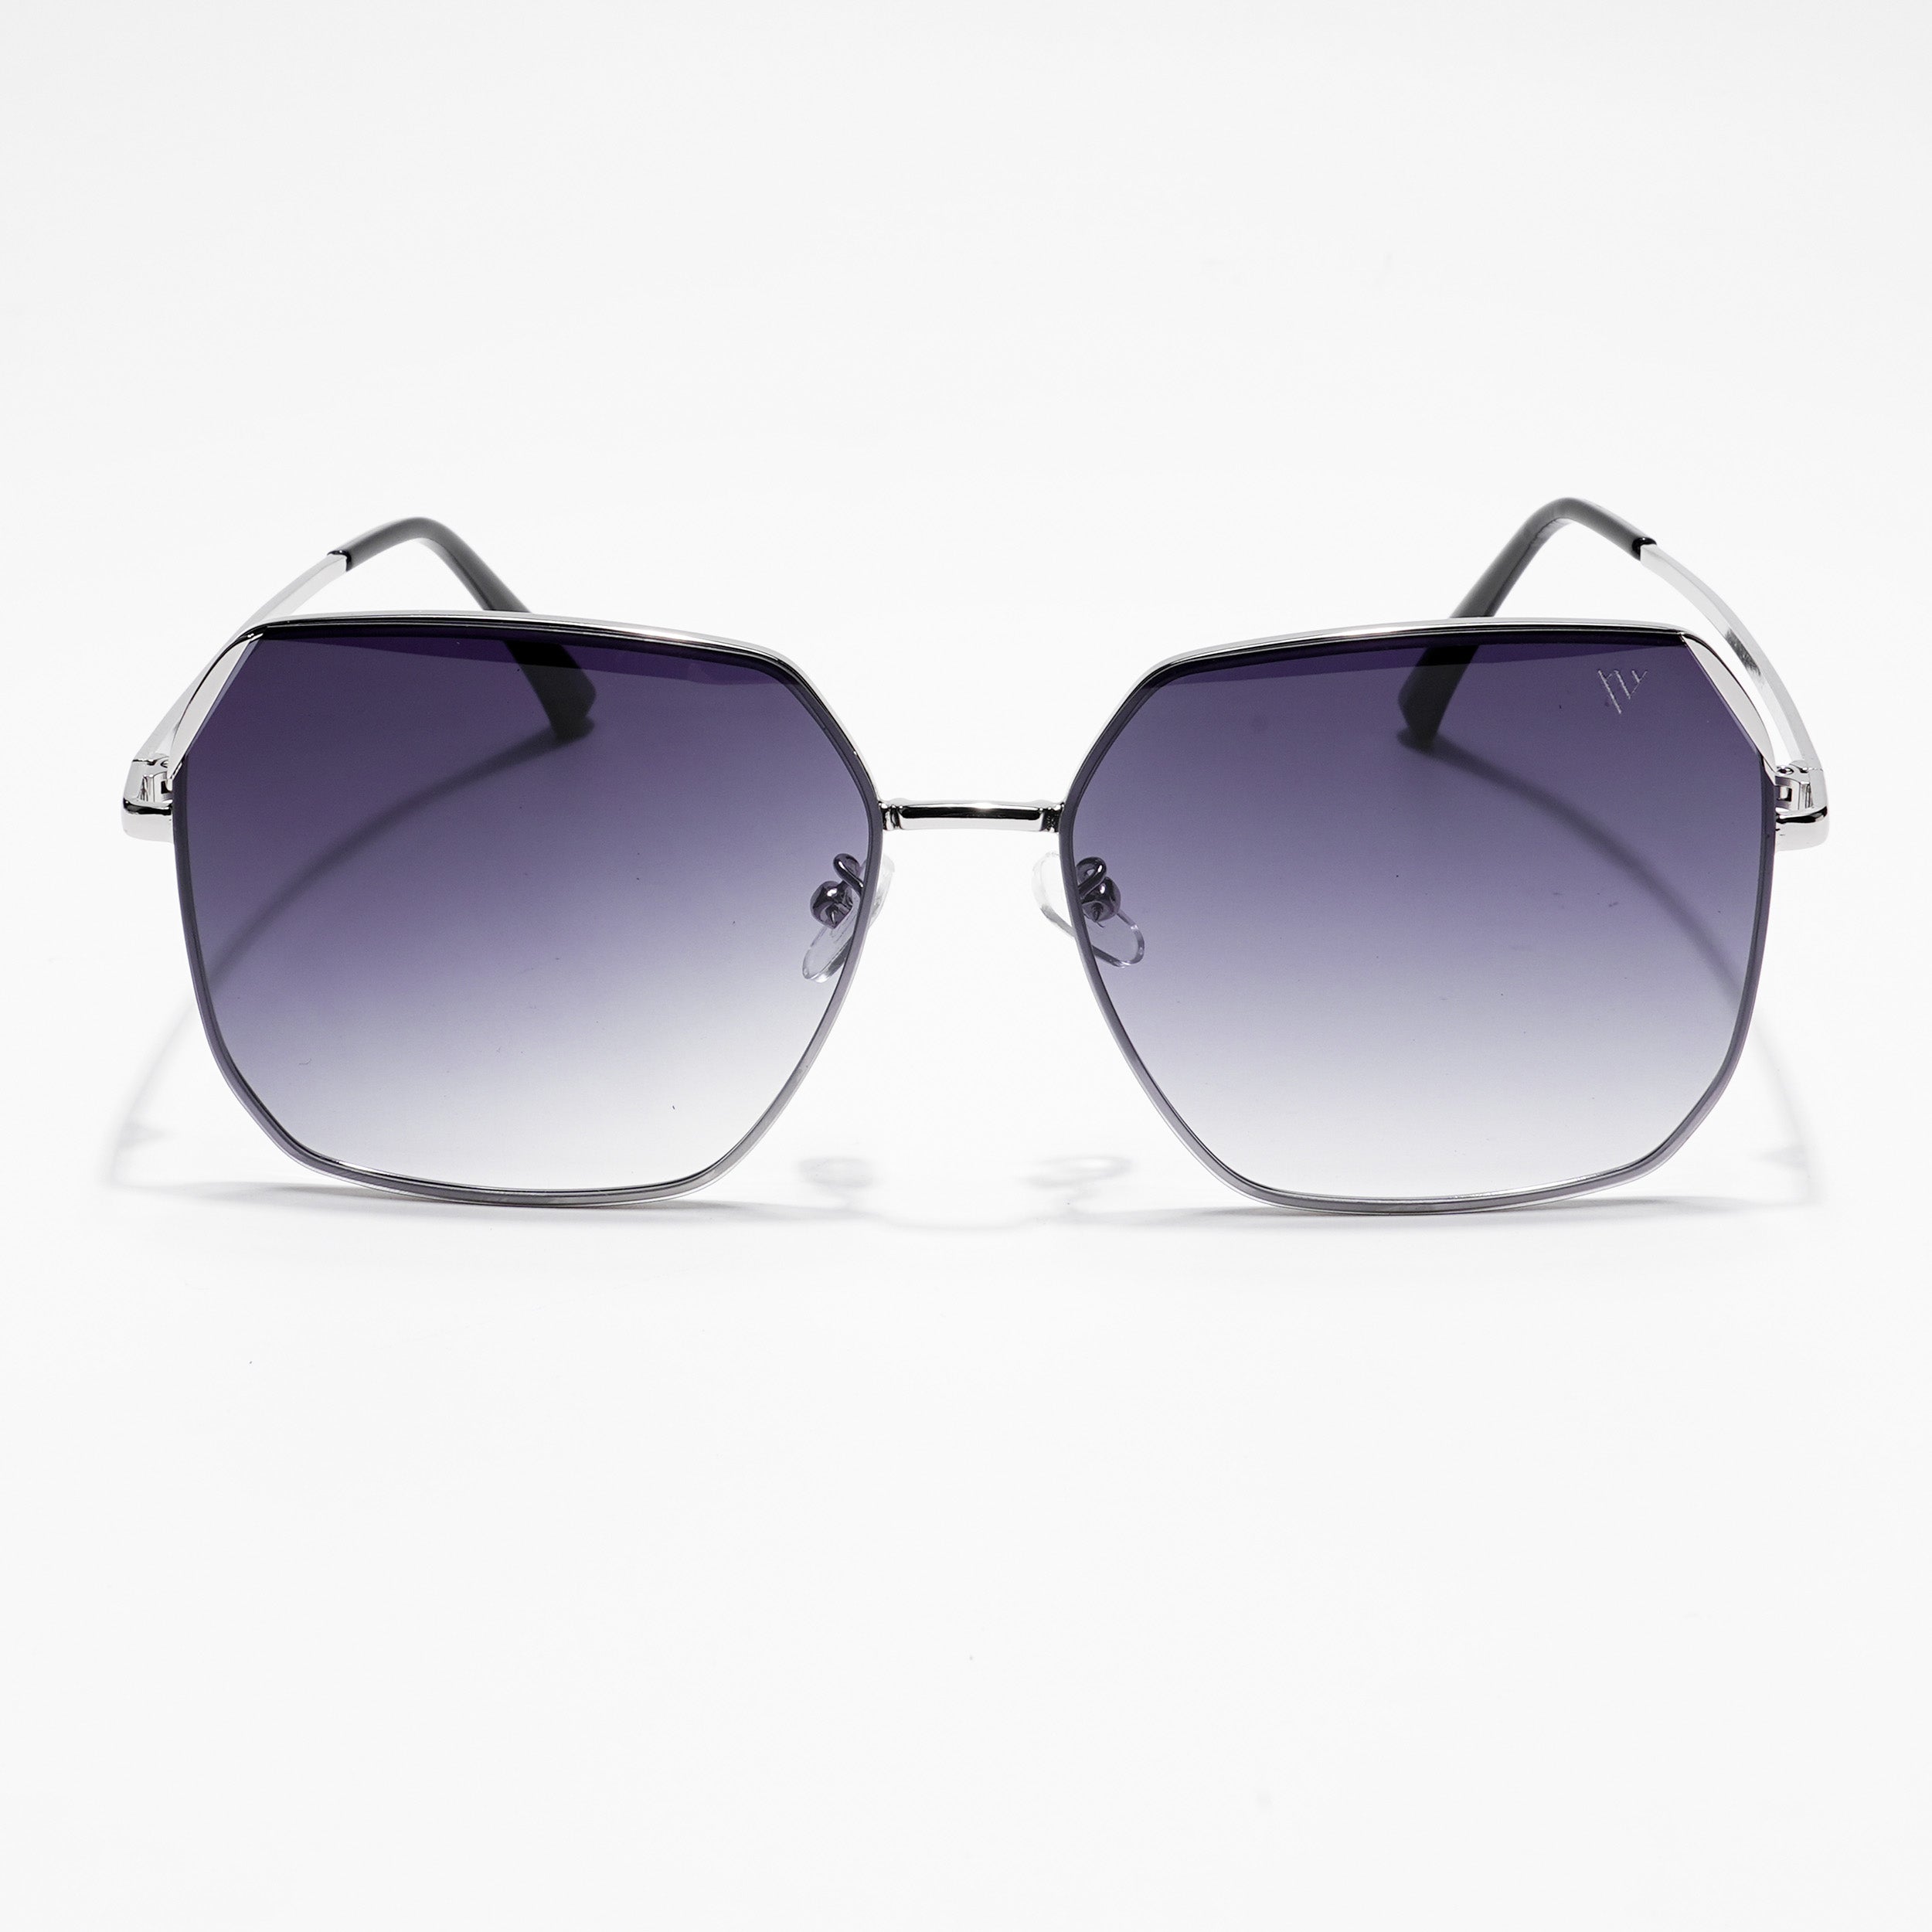 Voyage Grey Square Sunglasses for Men & Women (450MG4339)